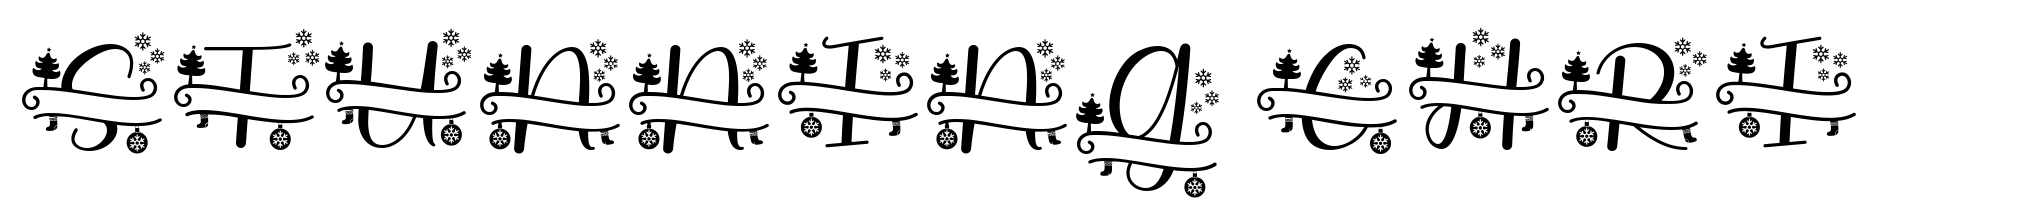 Stunning Christmas Monogram image